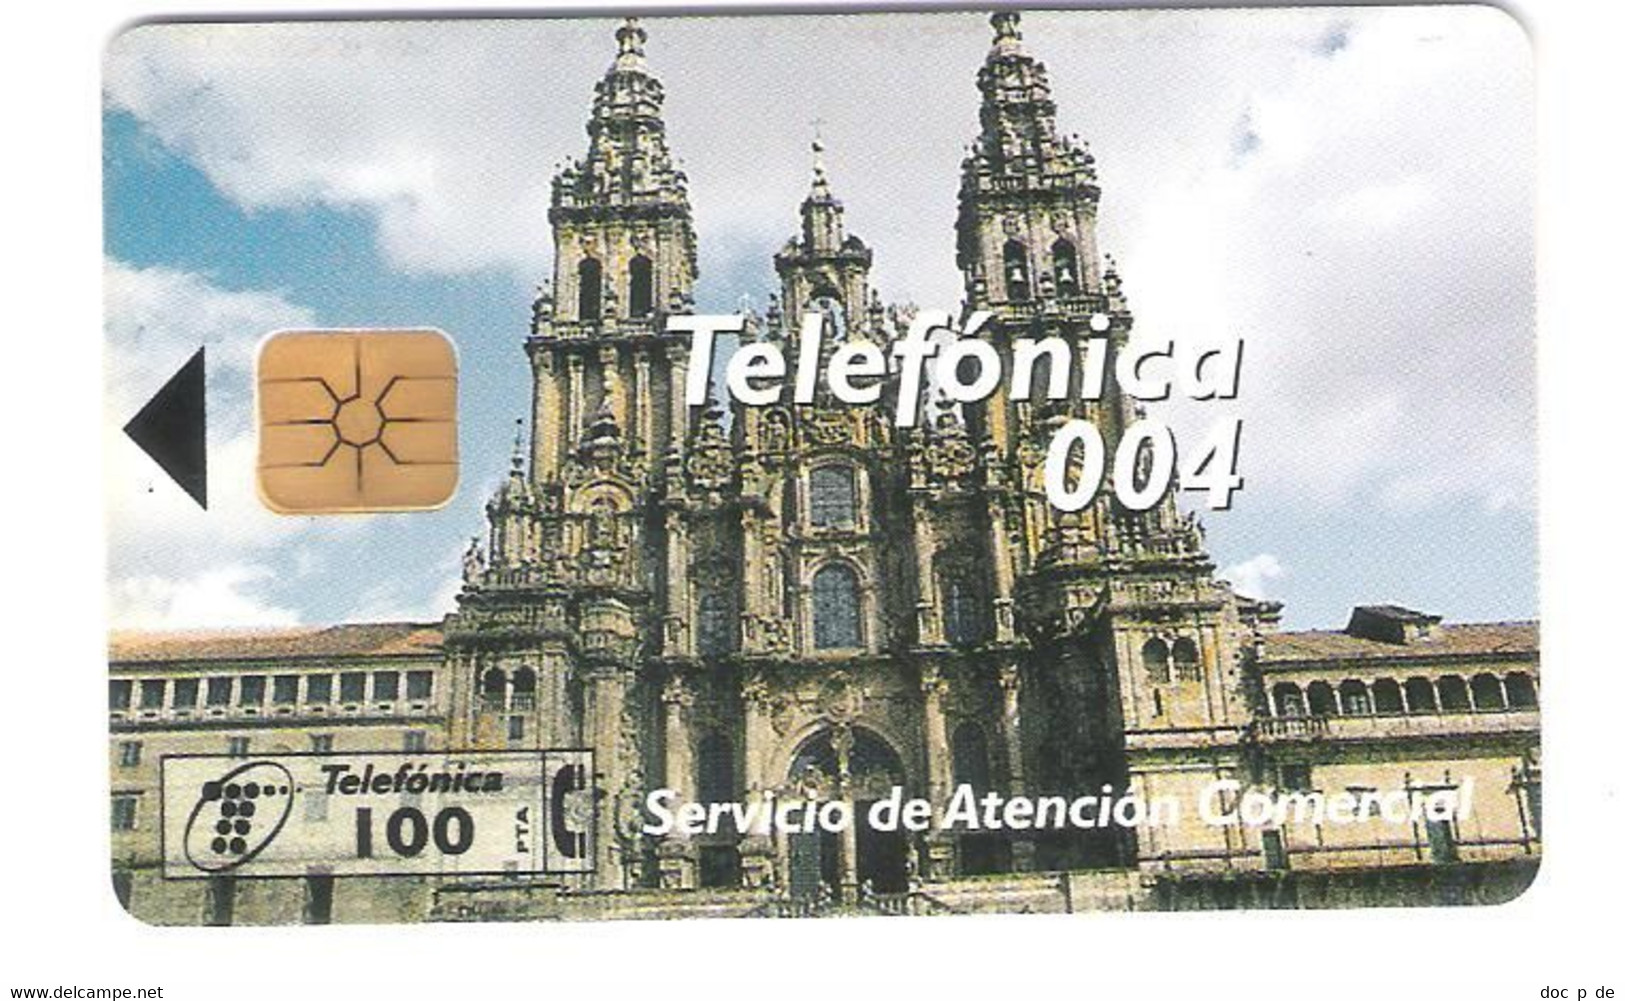 Spain - G-011 - Emision De Gentileza - Catedral De Santiago Telefonica 004 - Gift Issues